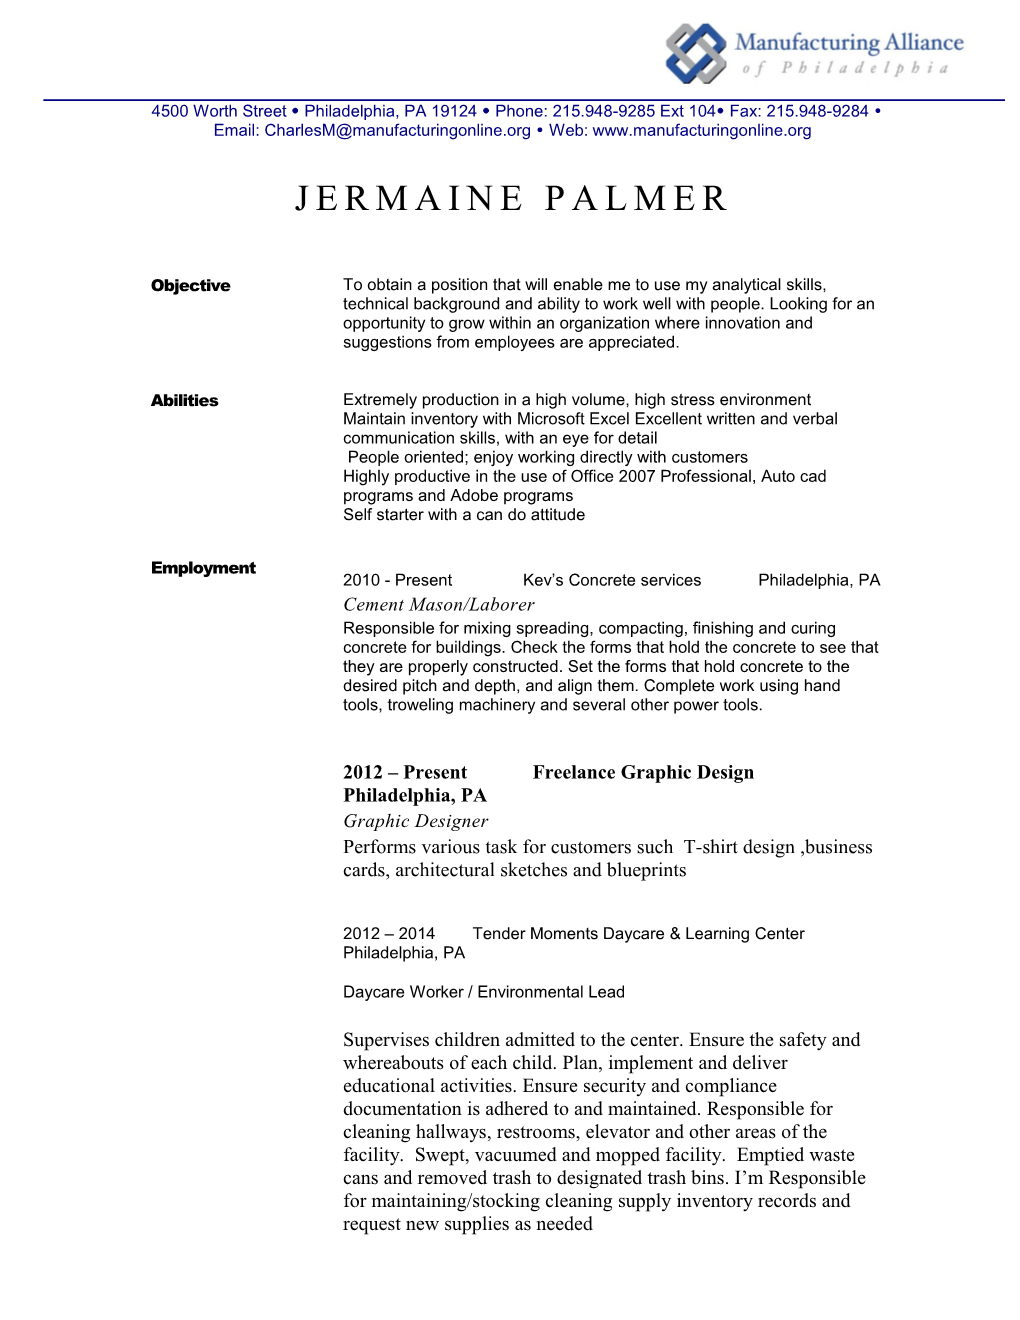 Jermaine Palmer